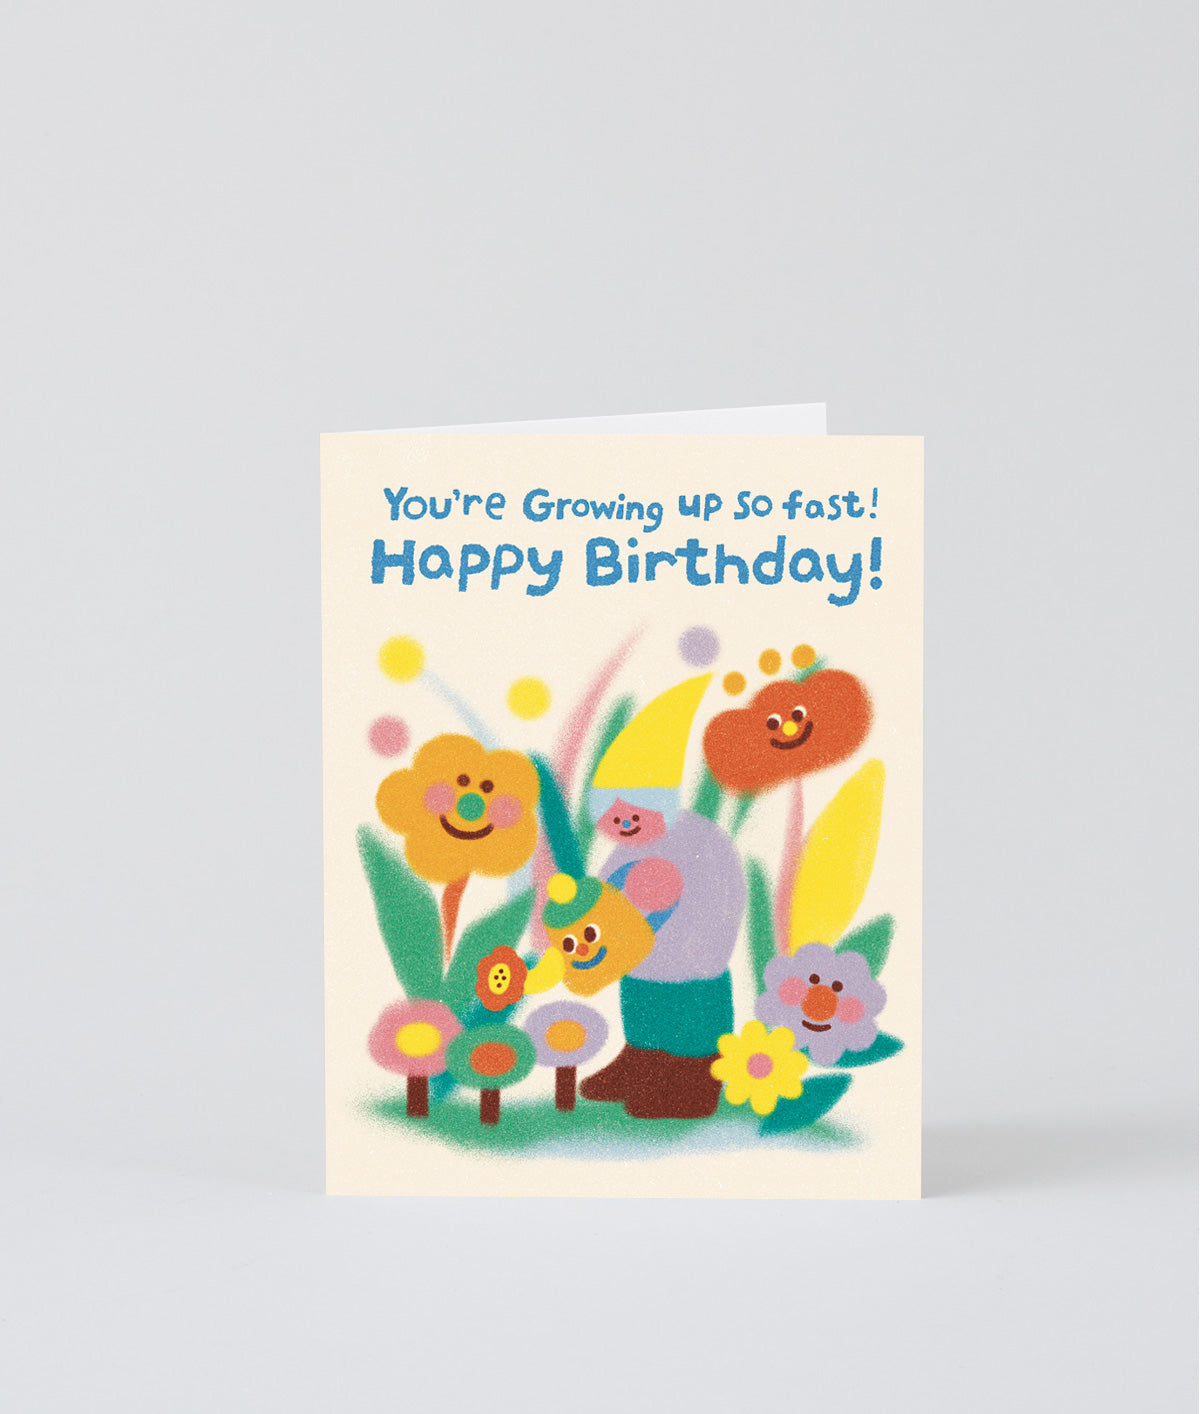 Growing Up Fast Birthday Kids Greetings Card